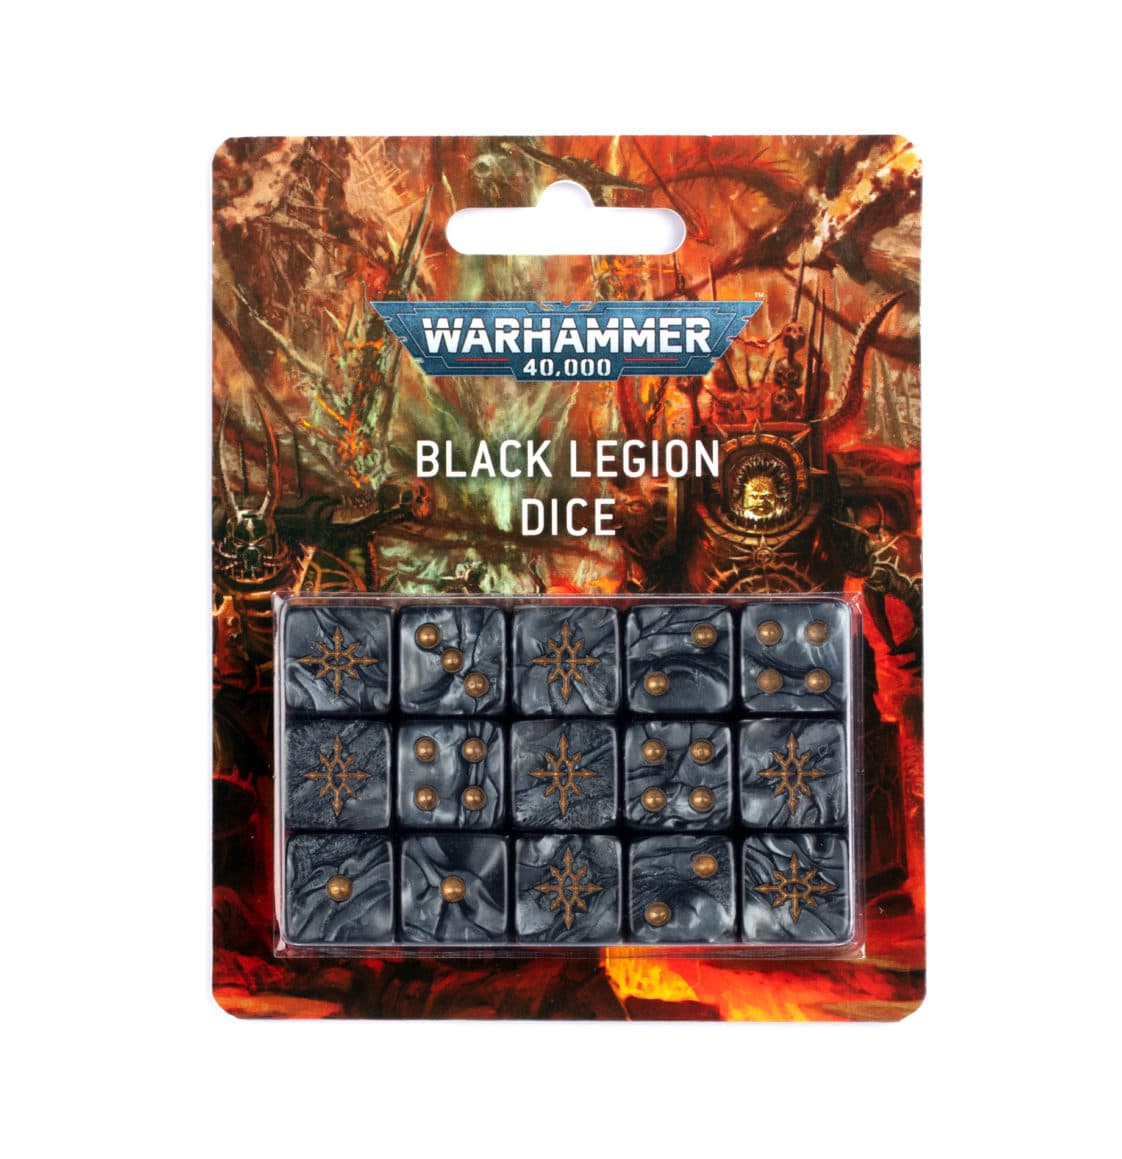 Warhammer 40,000 Black Legion Dice